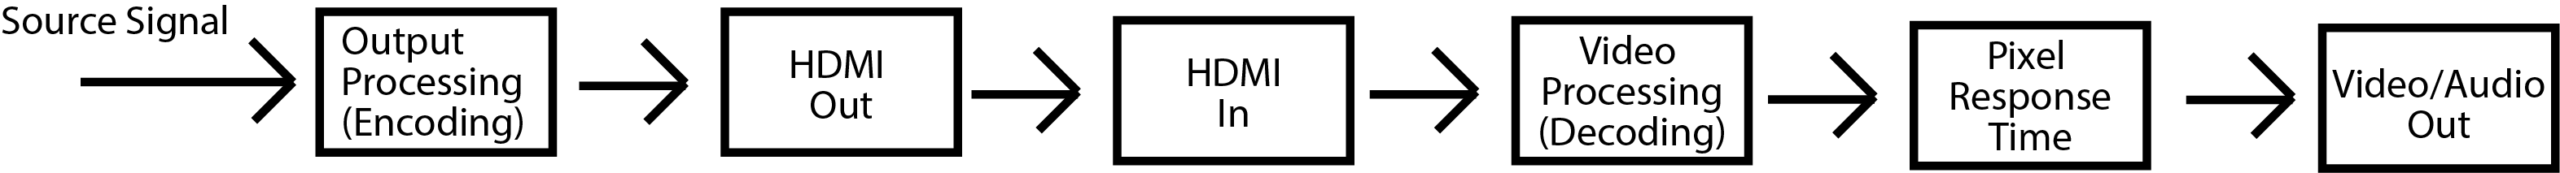 HDMI processing